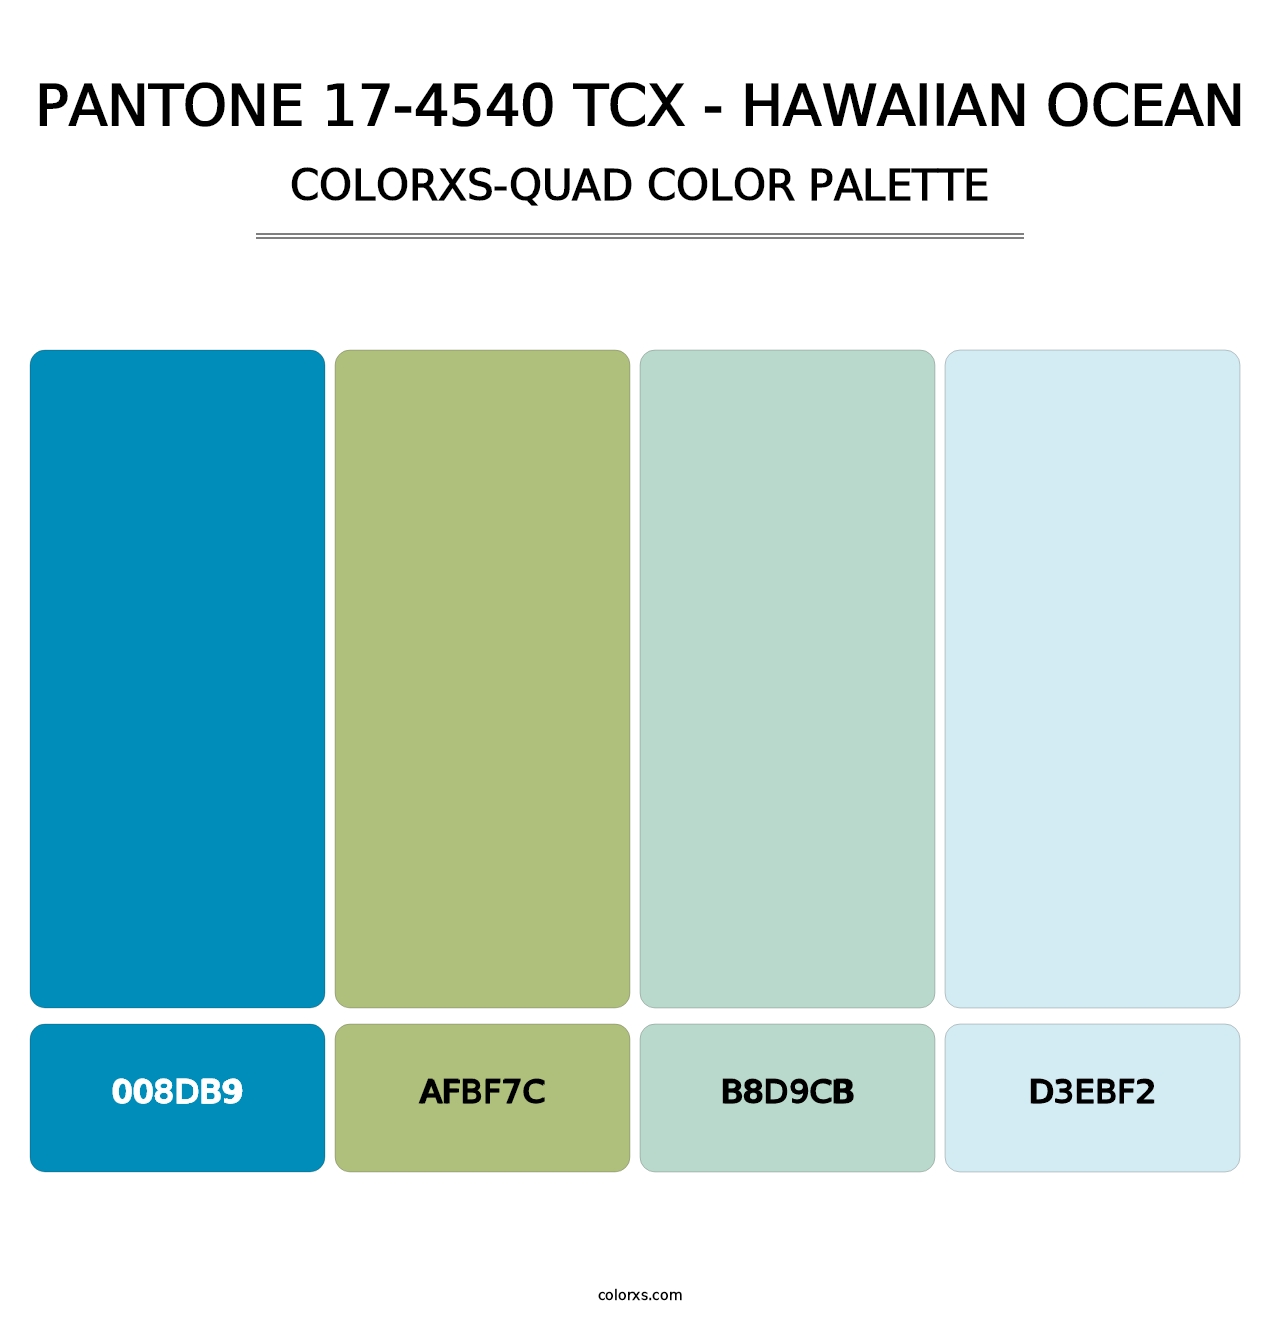 PANTONE 17-4540 TCX - Hawaiian Ocean - Colorxs Quad Palette